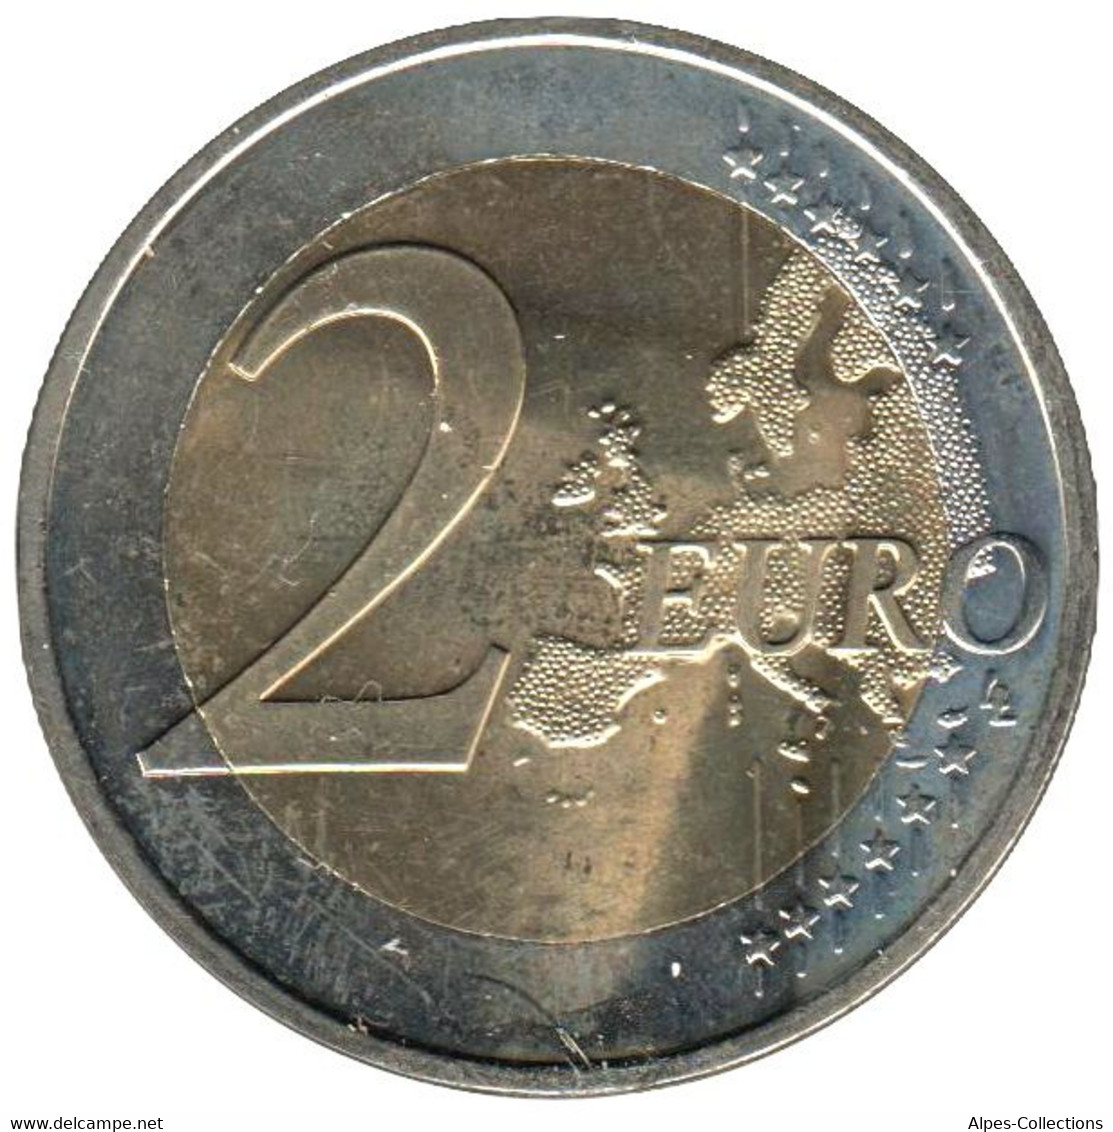 SQ20019.1 - SLOVAQUIE - 2 Euros Commémo. Milan Rastislav Stefanik - 2019 - Slovakia